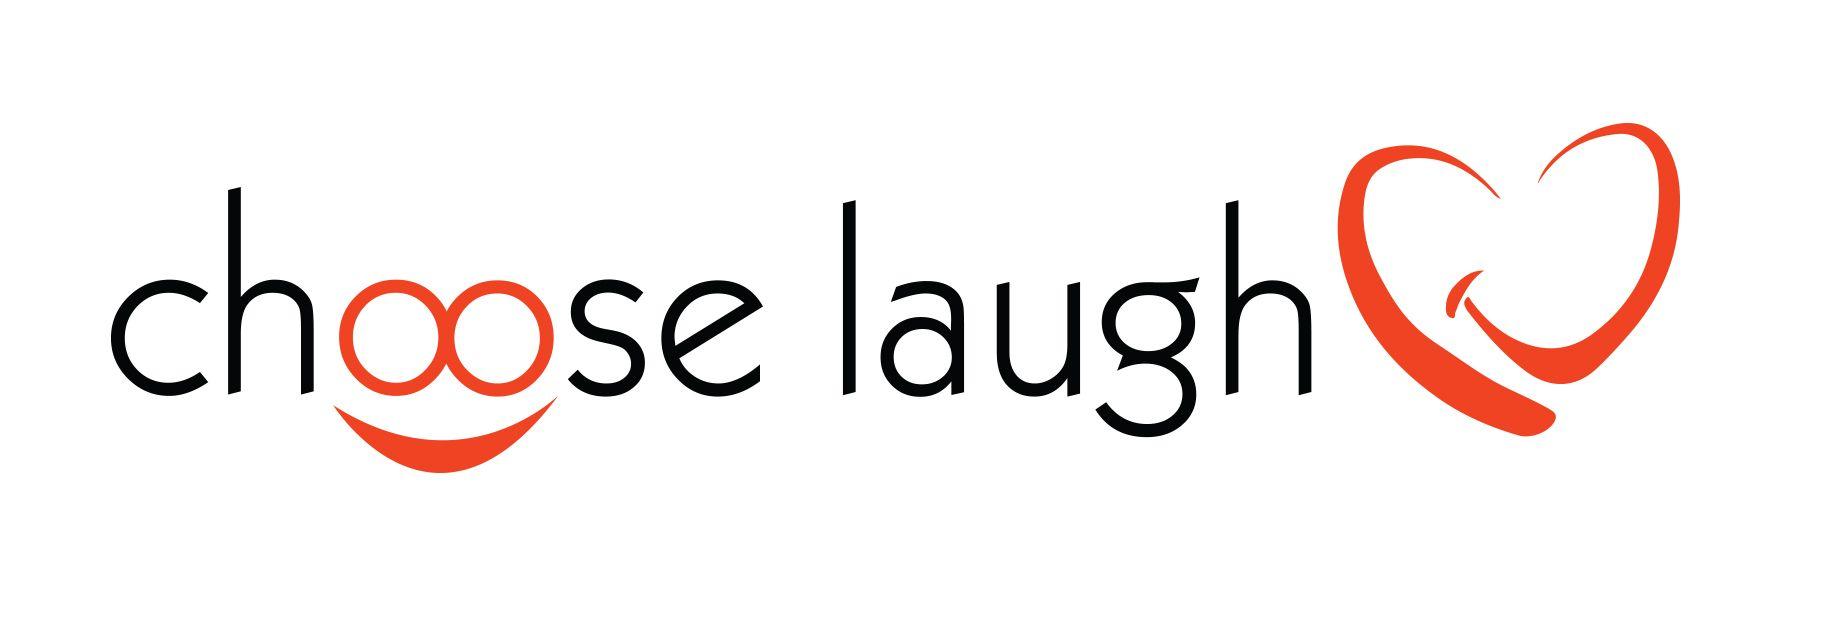 Laugh Logo - CHOOSE LAUGH LOGO 2 | Rhett Creative